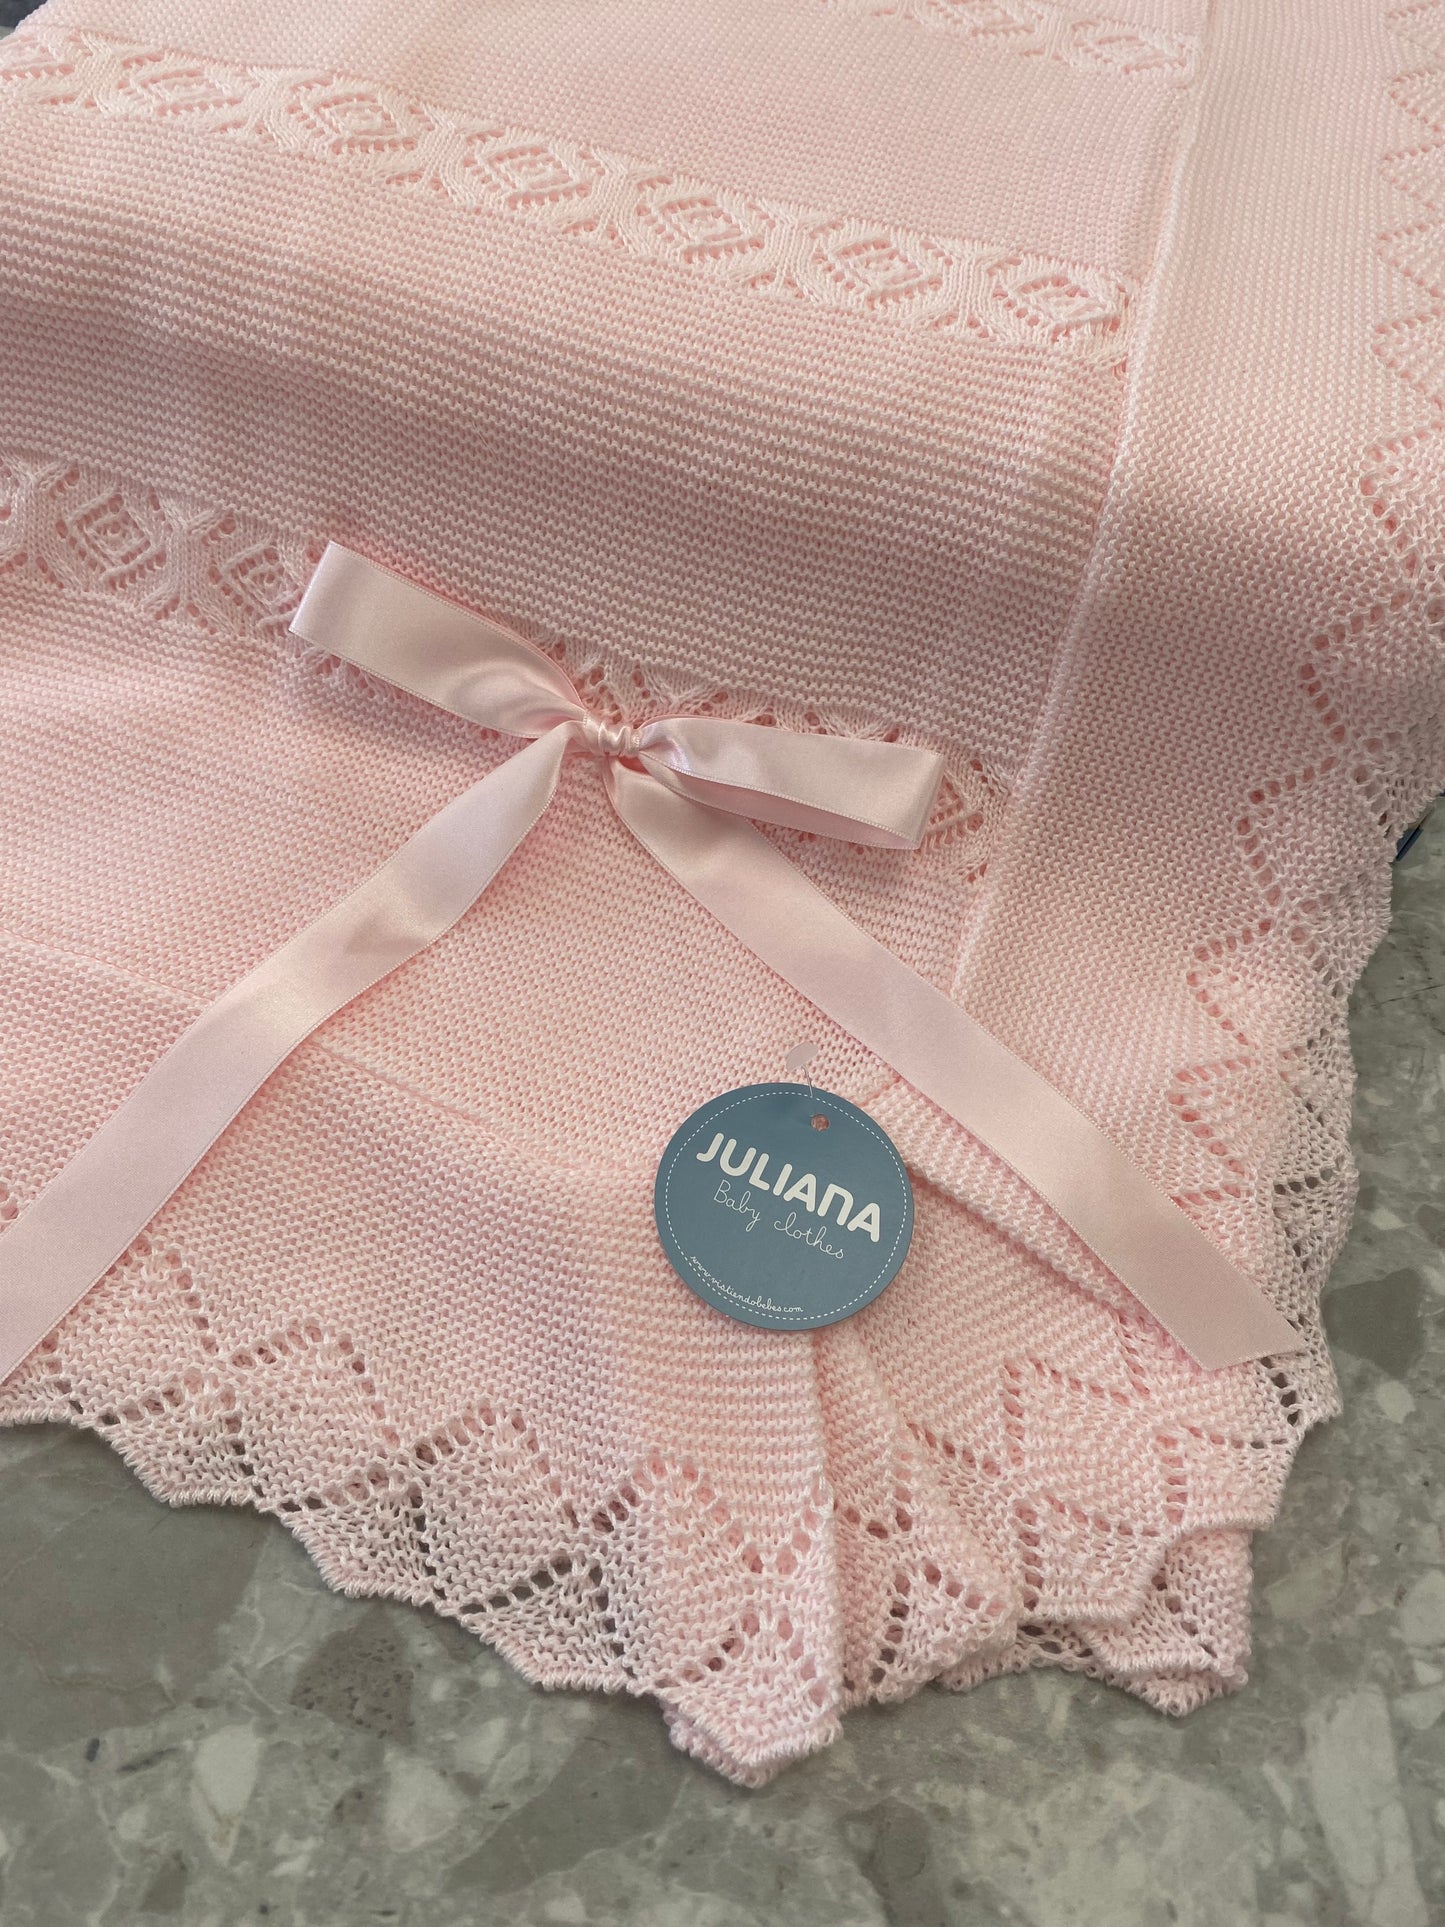 JULIANA LAYETTE Rombos Pink Knitted Blanket - J7001